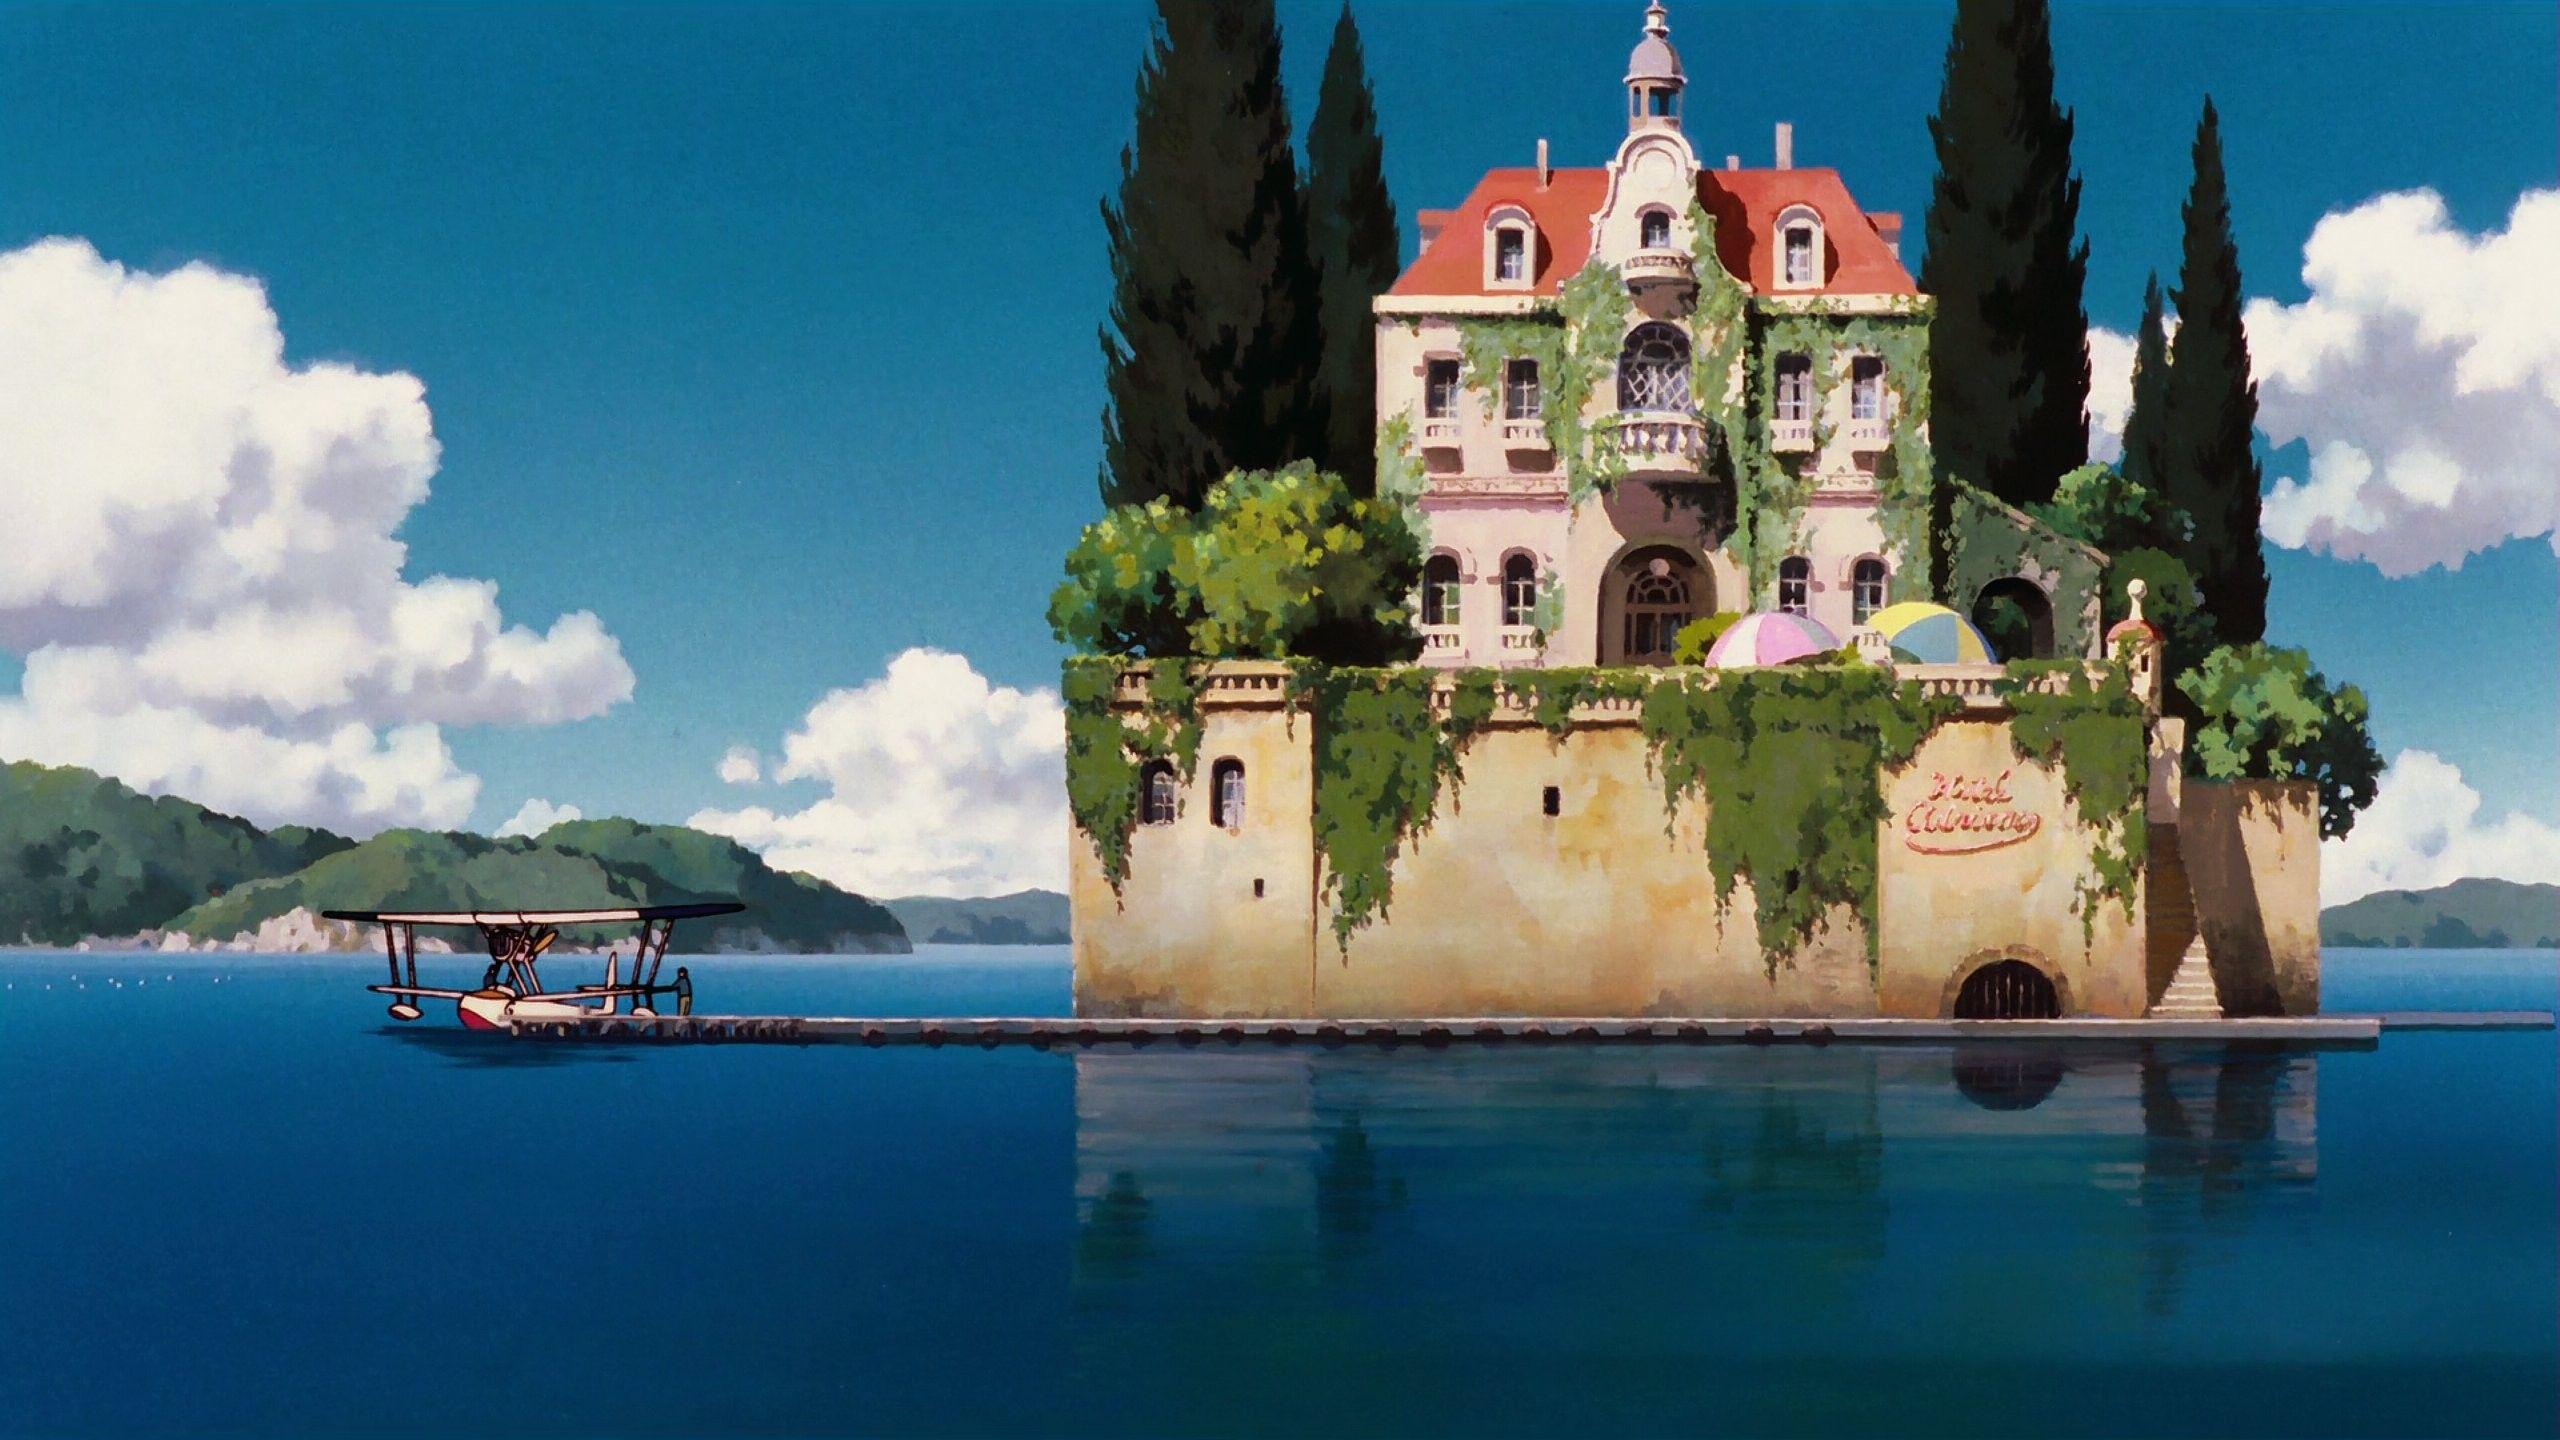 Studio Ghibli HD Wallpaper and Background Image